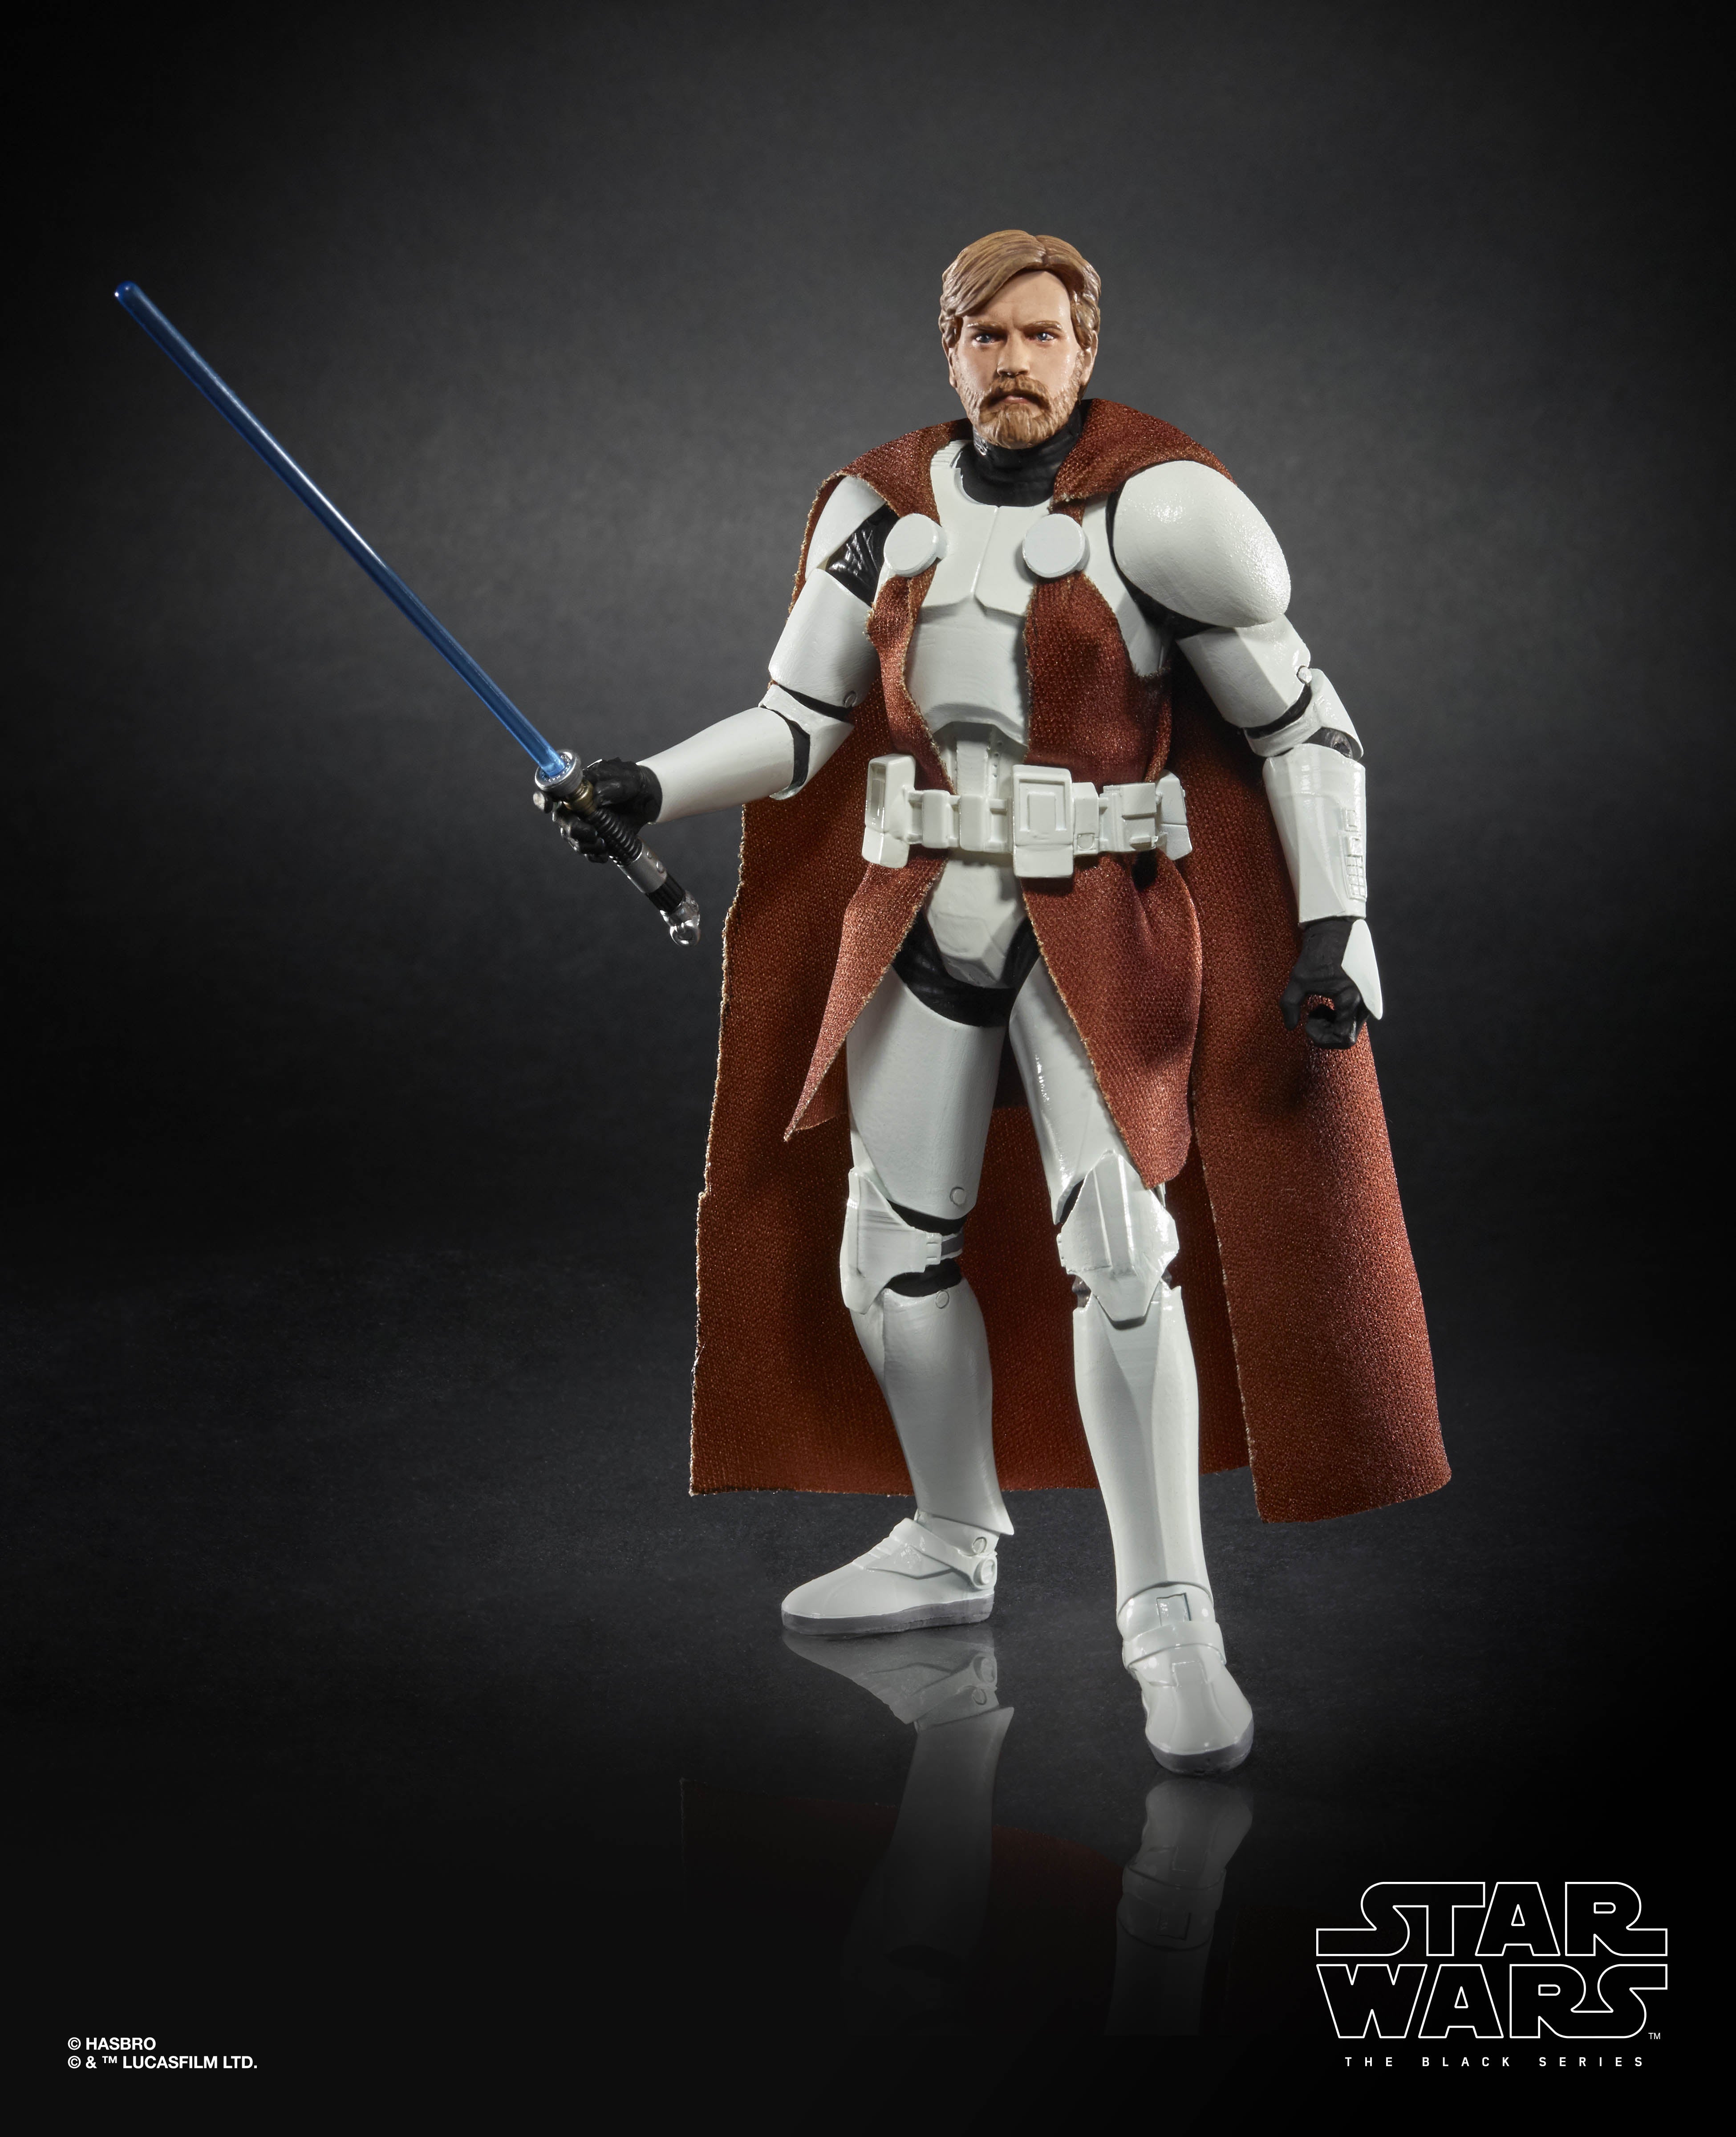 Hasbro Star Wars Black Series Clone Commander Obi-Wan Kenobi Action Figure Walgreens Exclusive 2